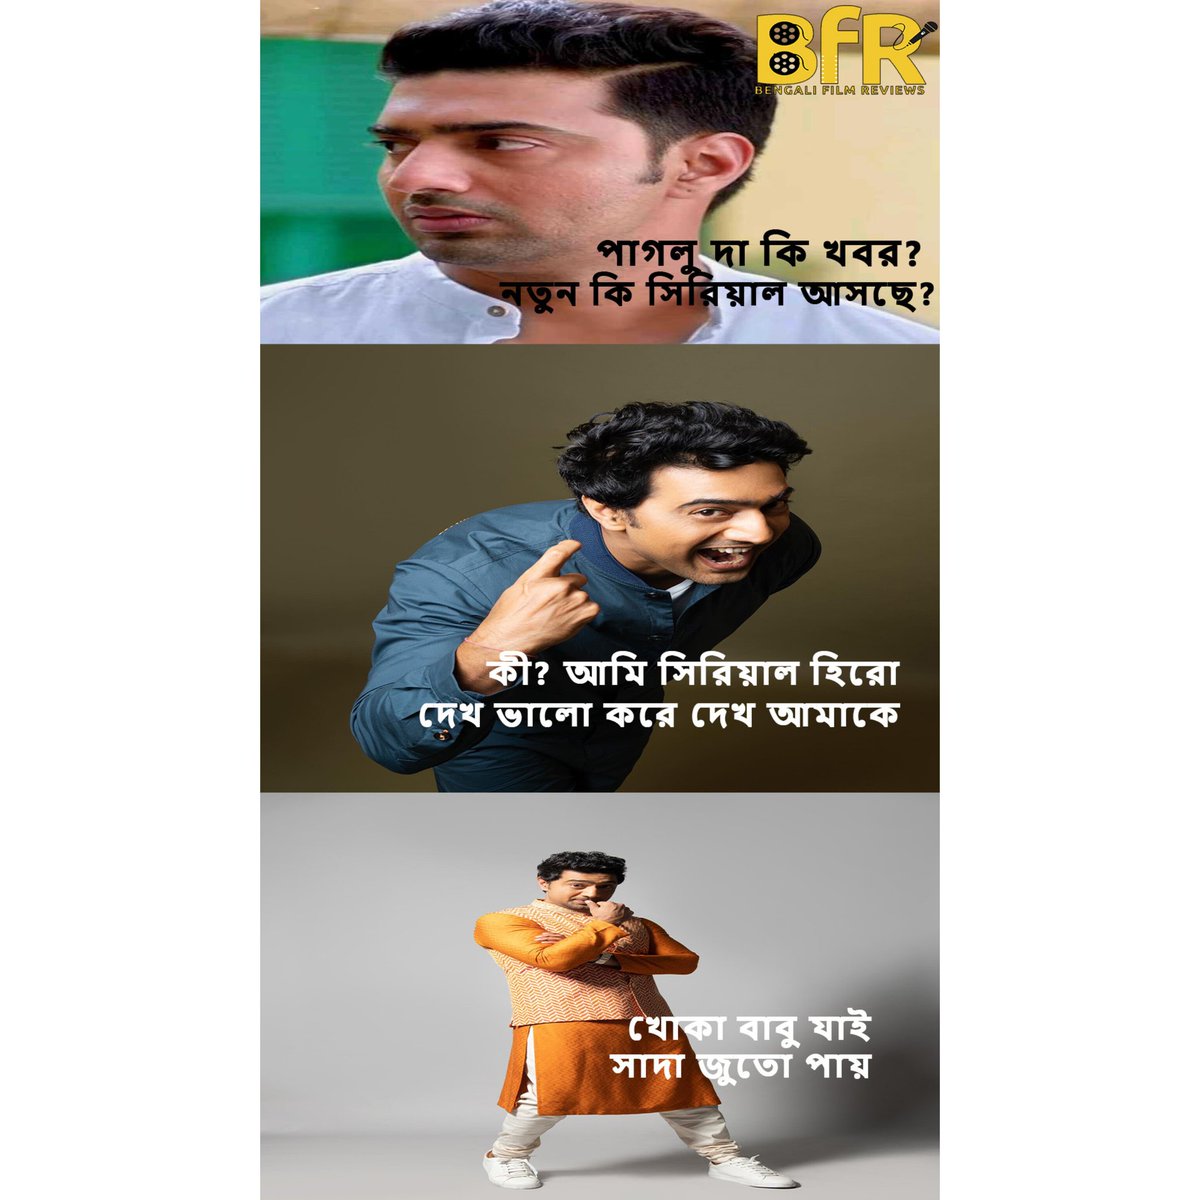 Paglu vs Khokababu 😂

#bfrmemes #dev #khokababu #paglu #memevibes #bengalifilmreviews #bengalimovies #memecontents #filmymemes #bfr